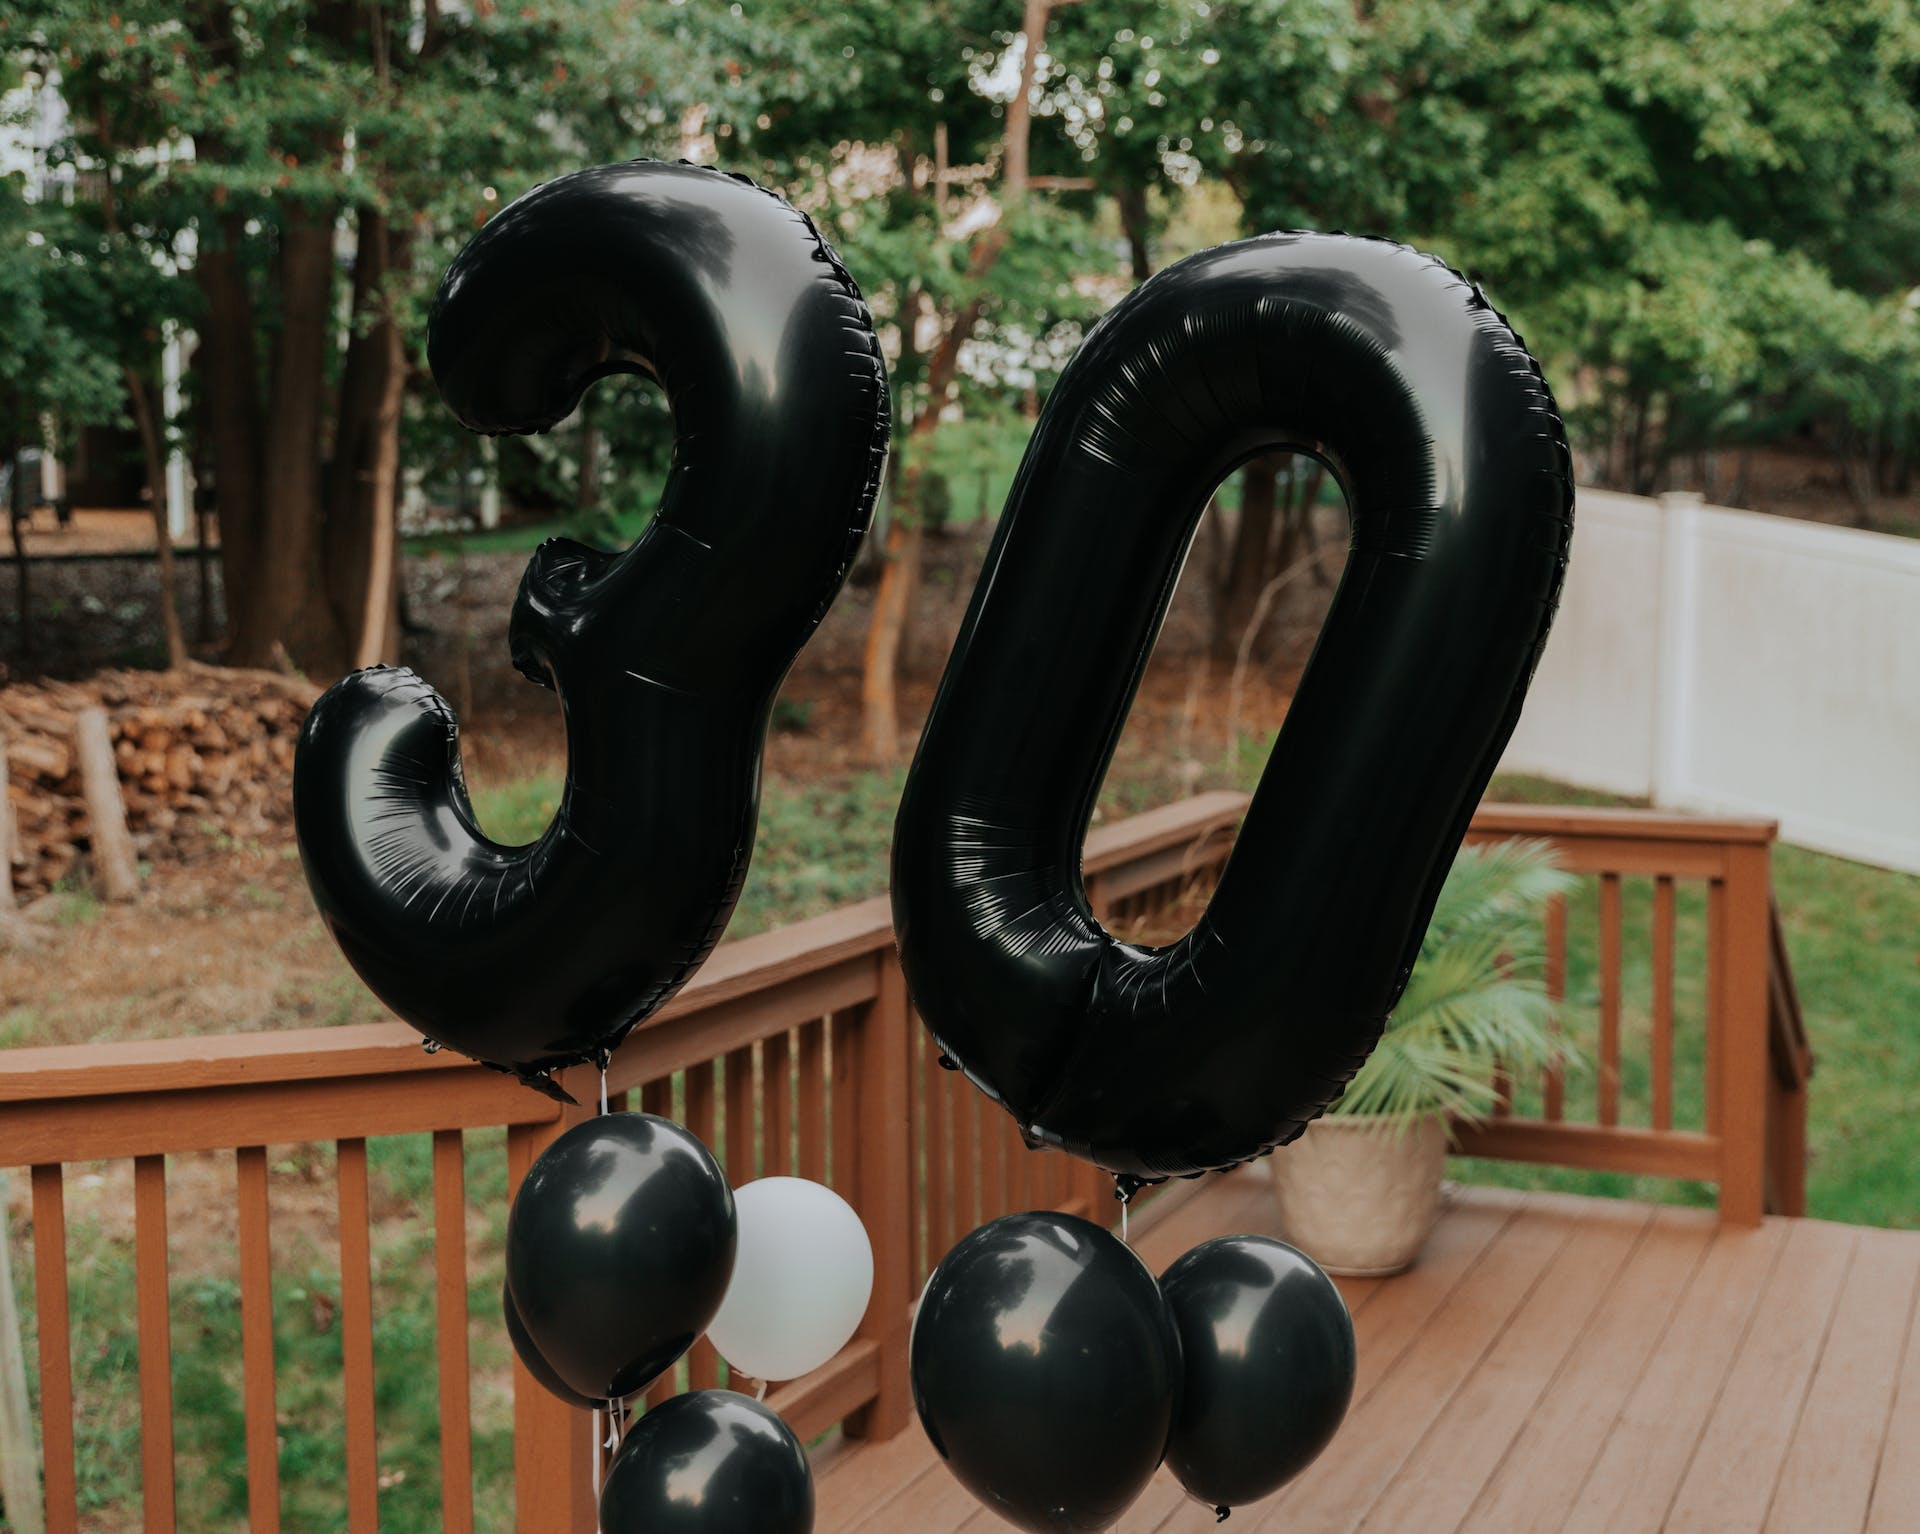 30th birthday balloons | Source: Pexels